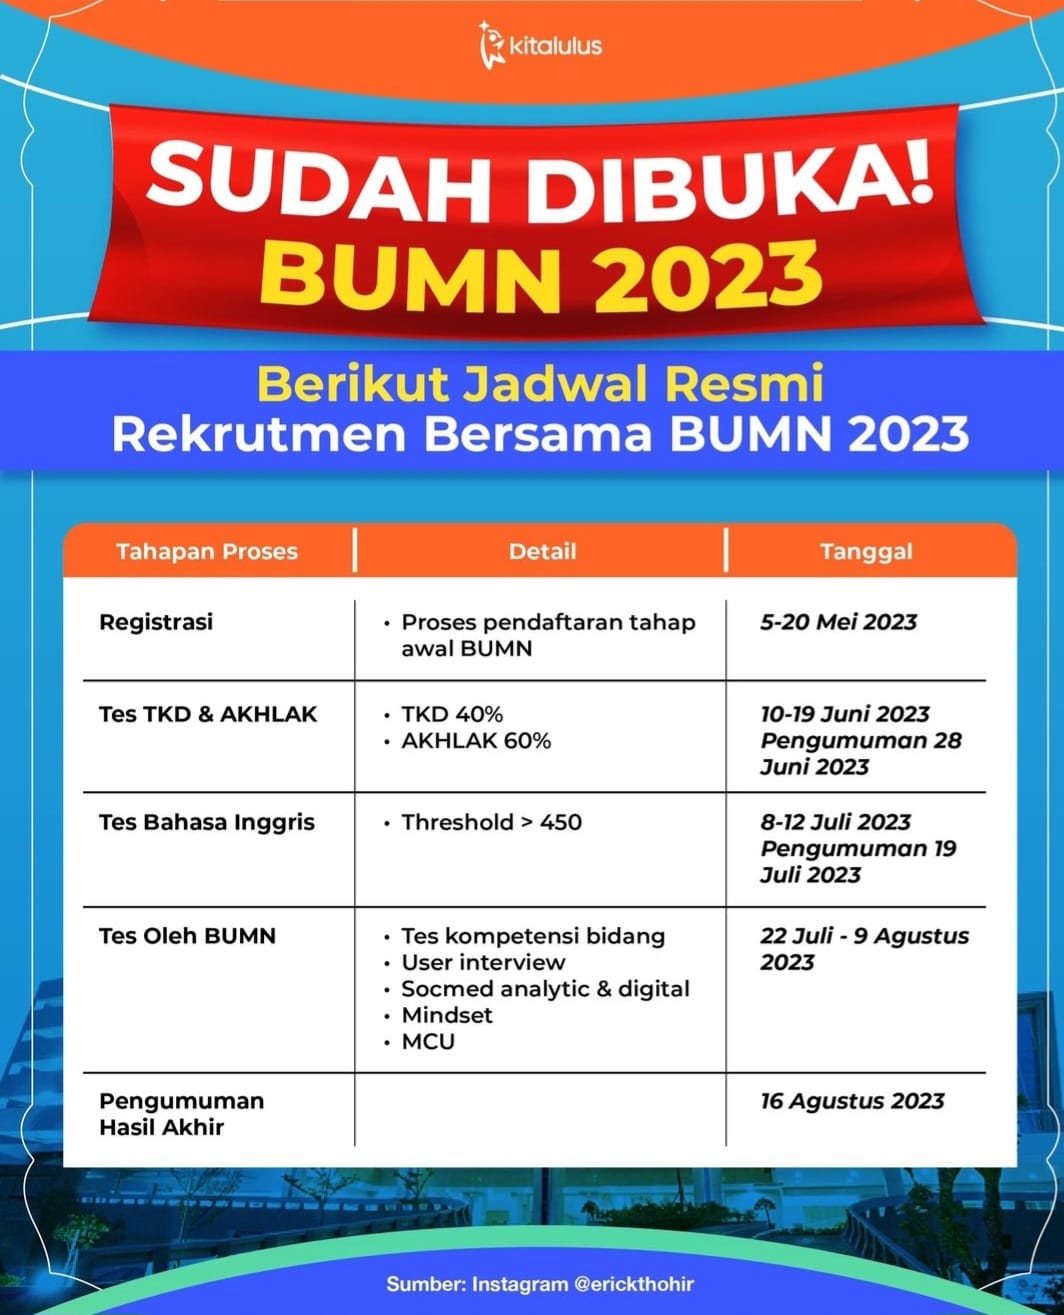 Recruitment with BUMN 2023